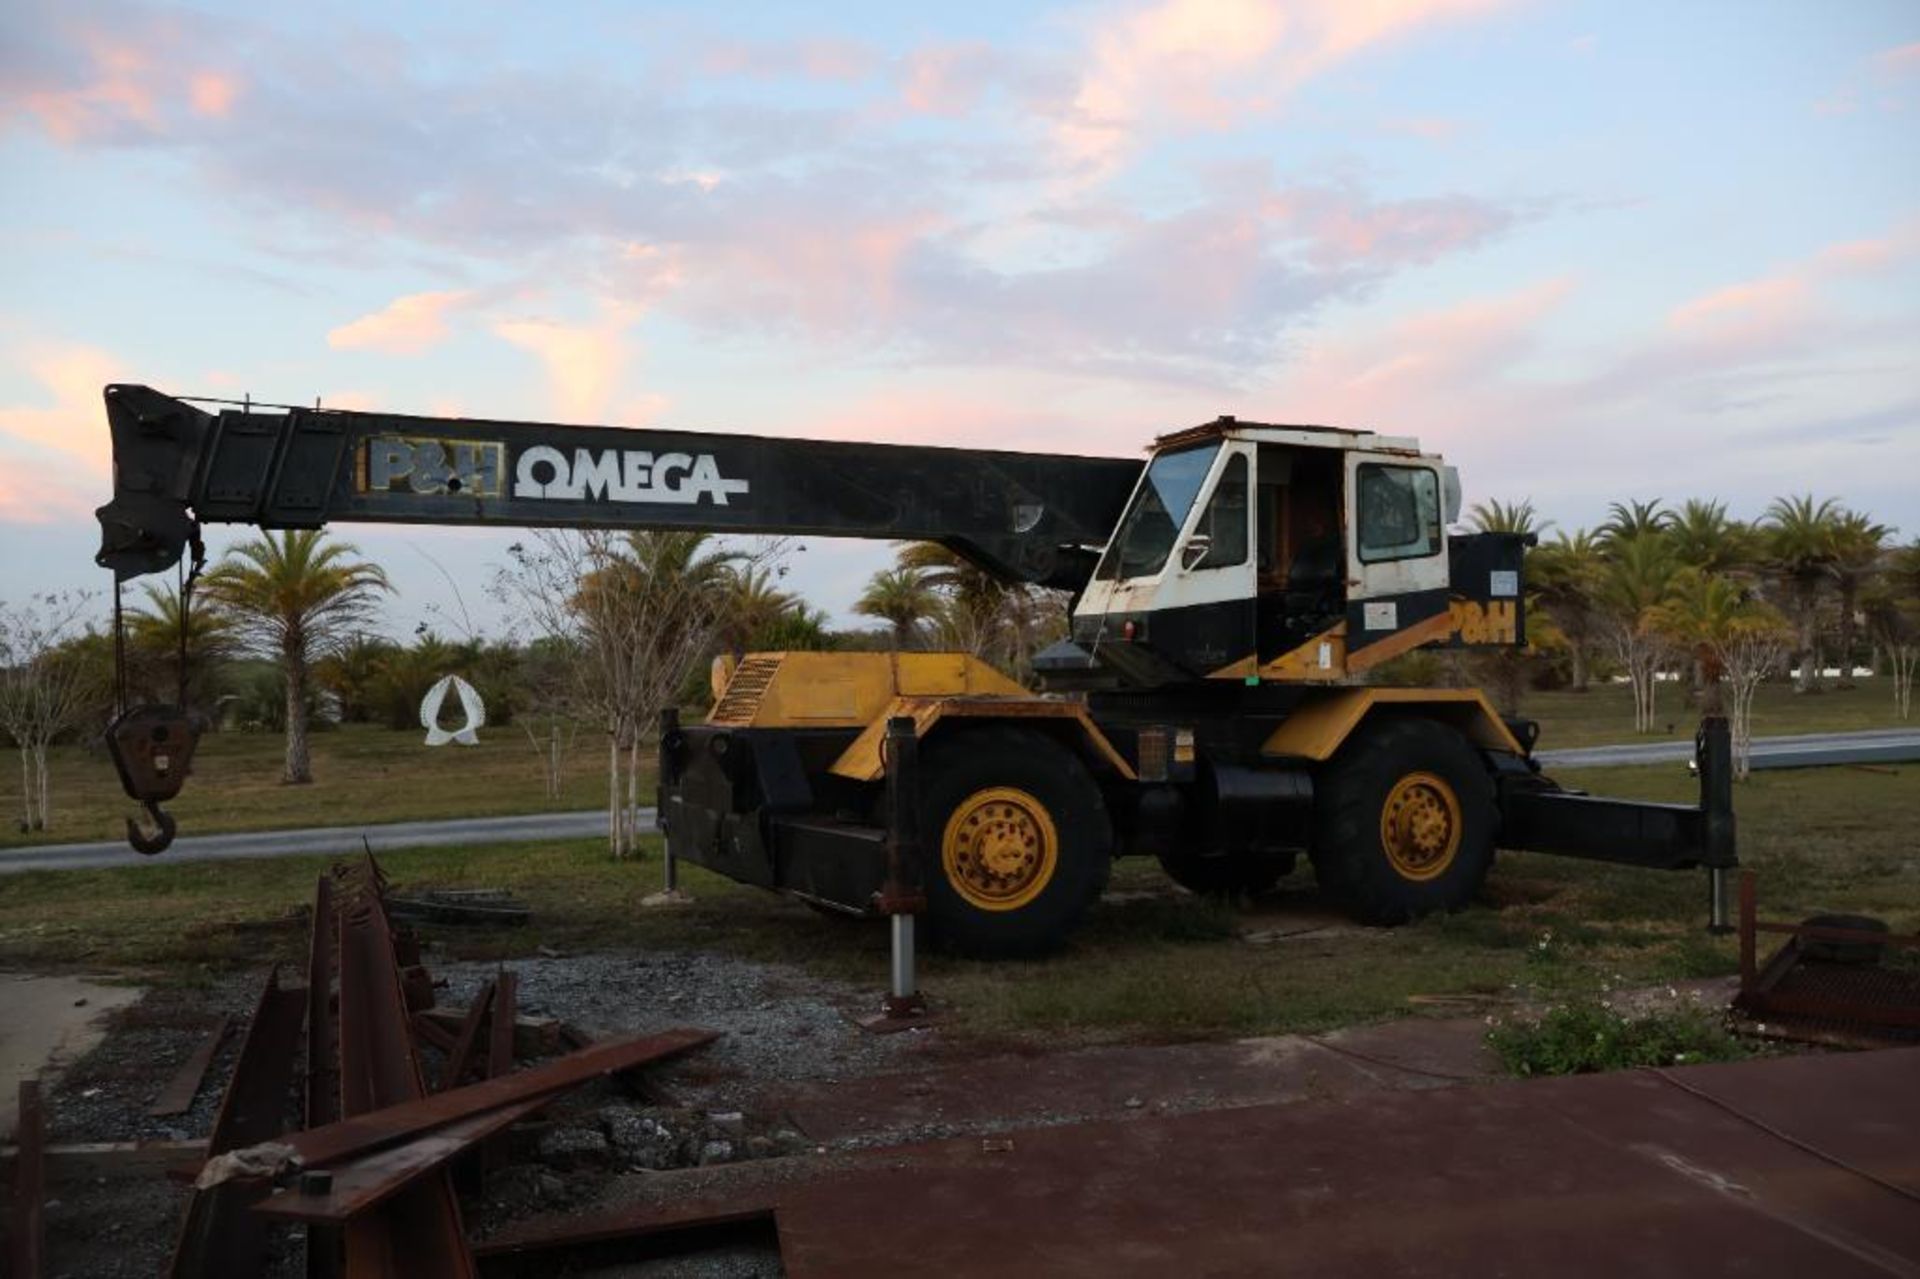 P&H Omega 18 rough terrain crane